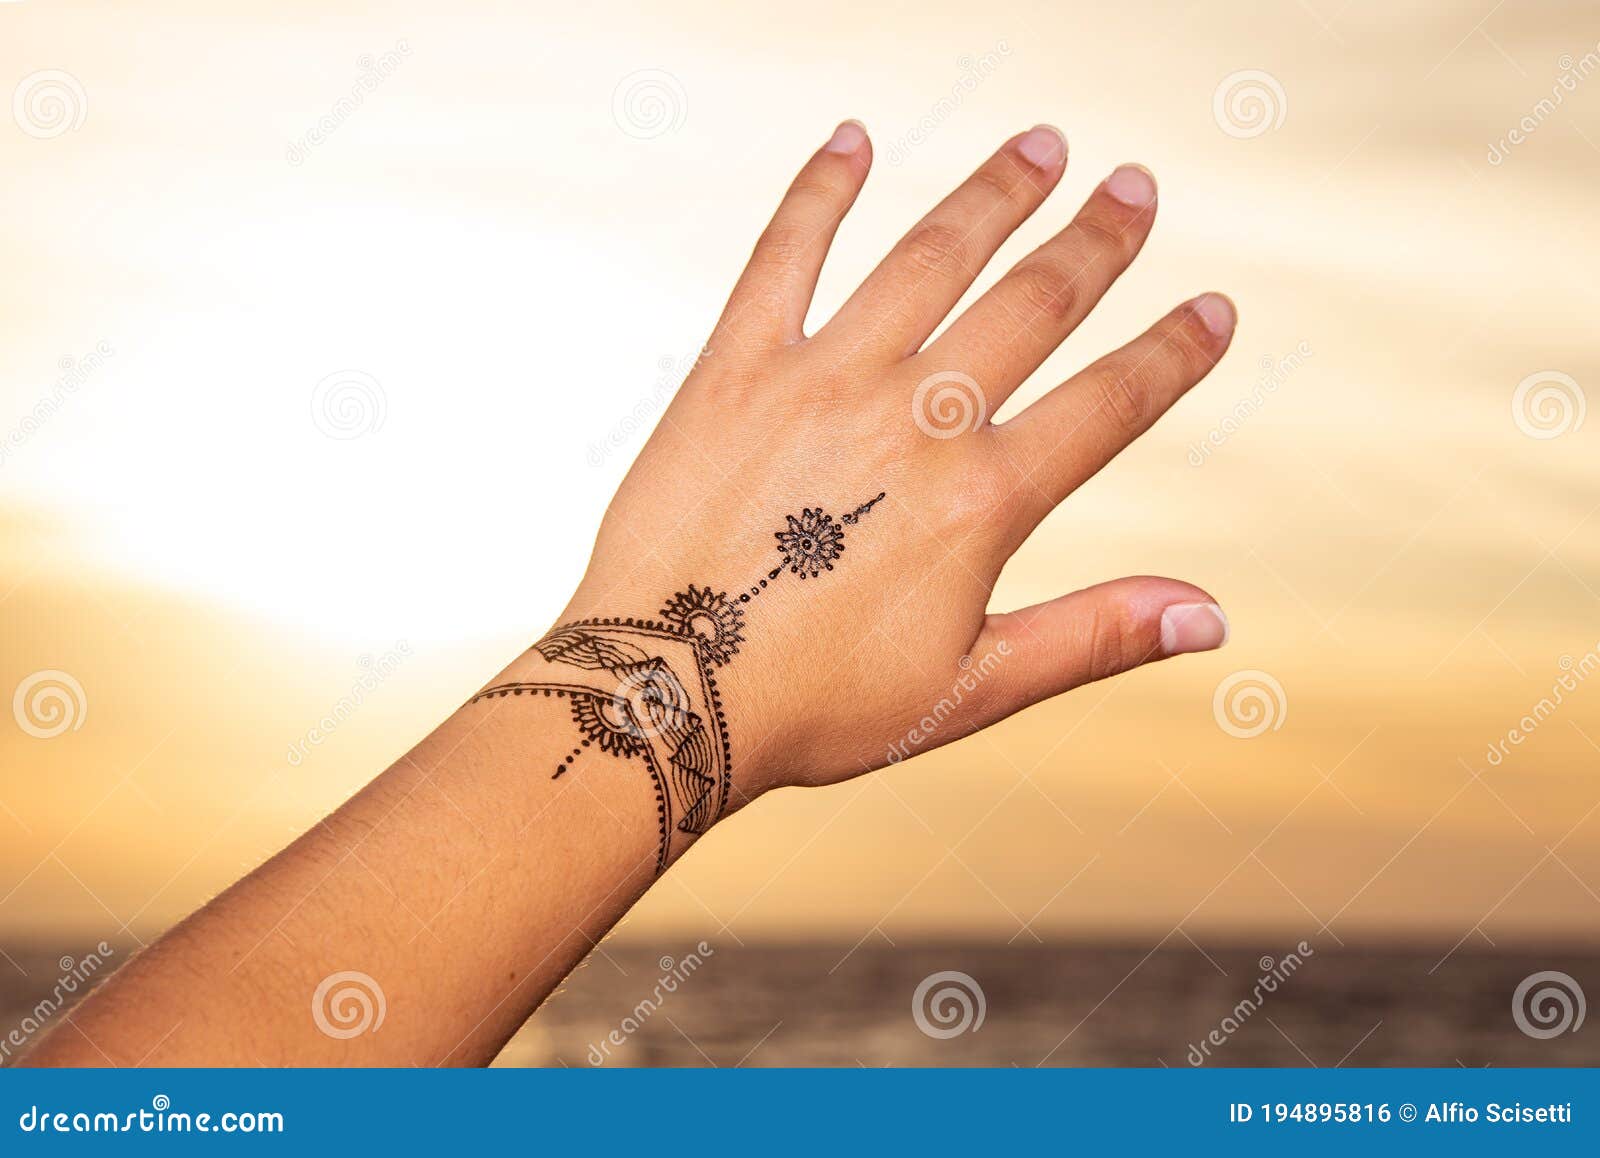 Henna Tattoo Painting on the Hand Stock Photo - Image of hennacopy,  beautiful: 194895816